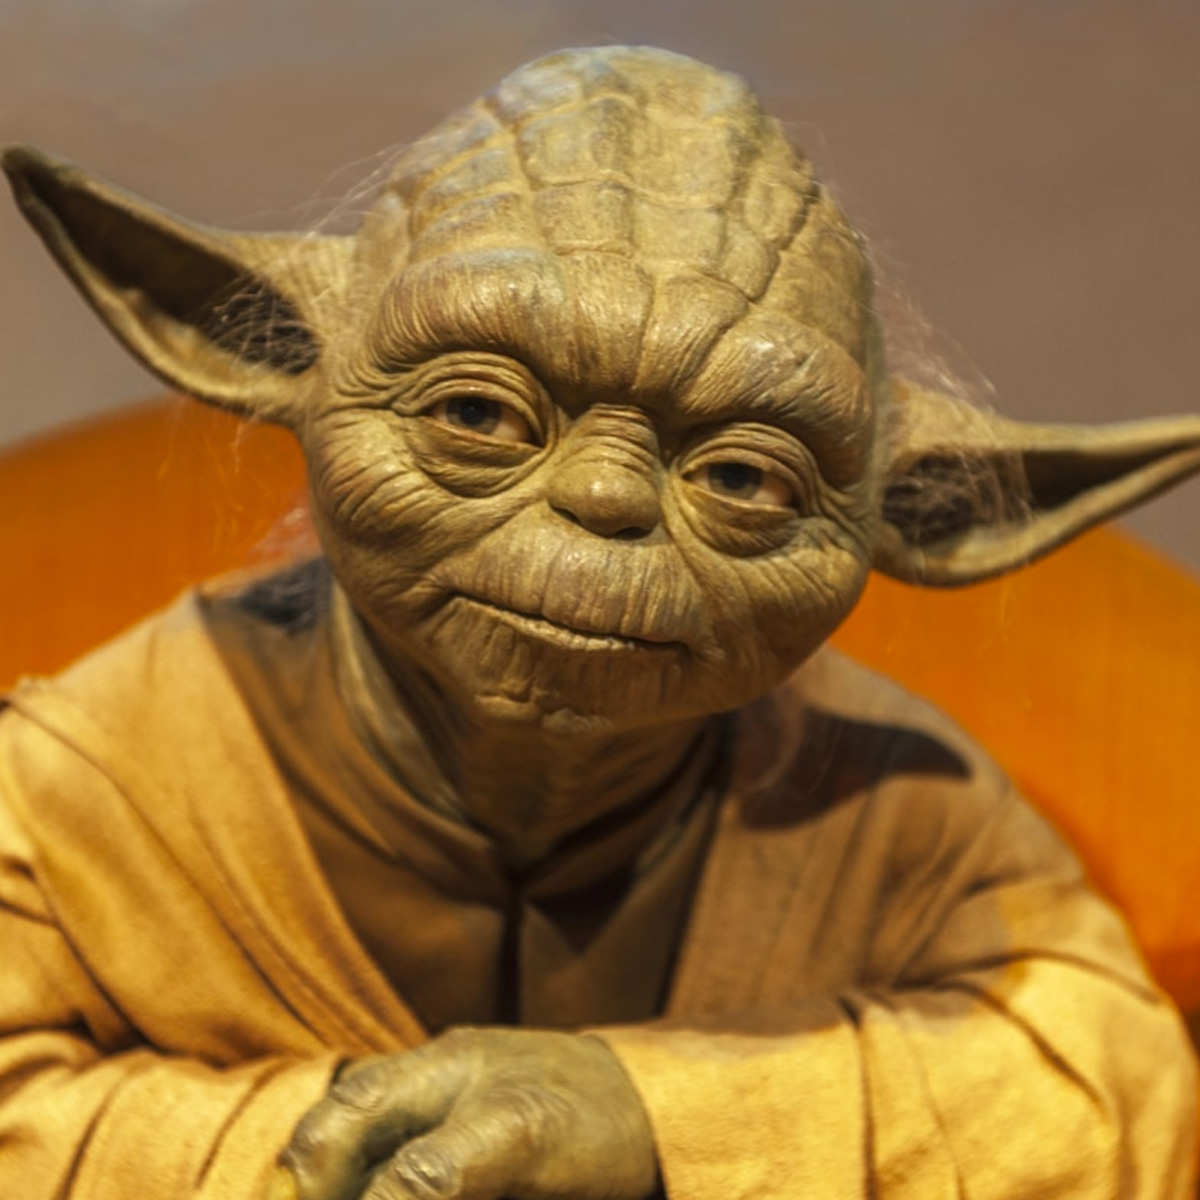 Yoda - Most Powerful Jedi in Star Wars